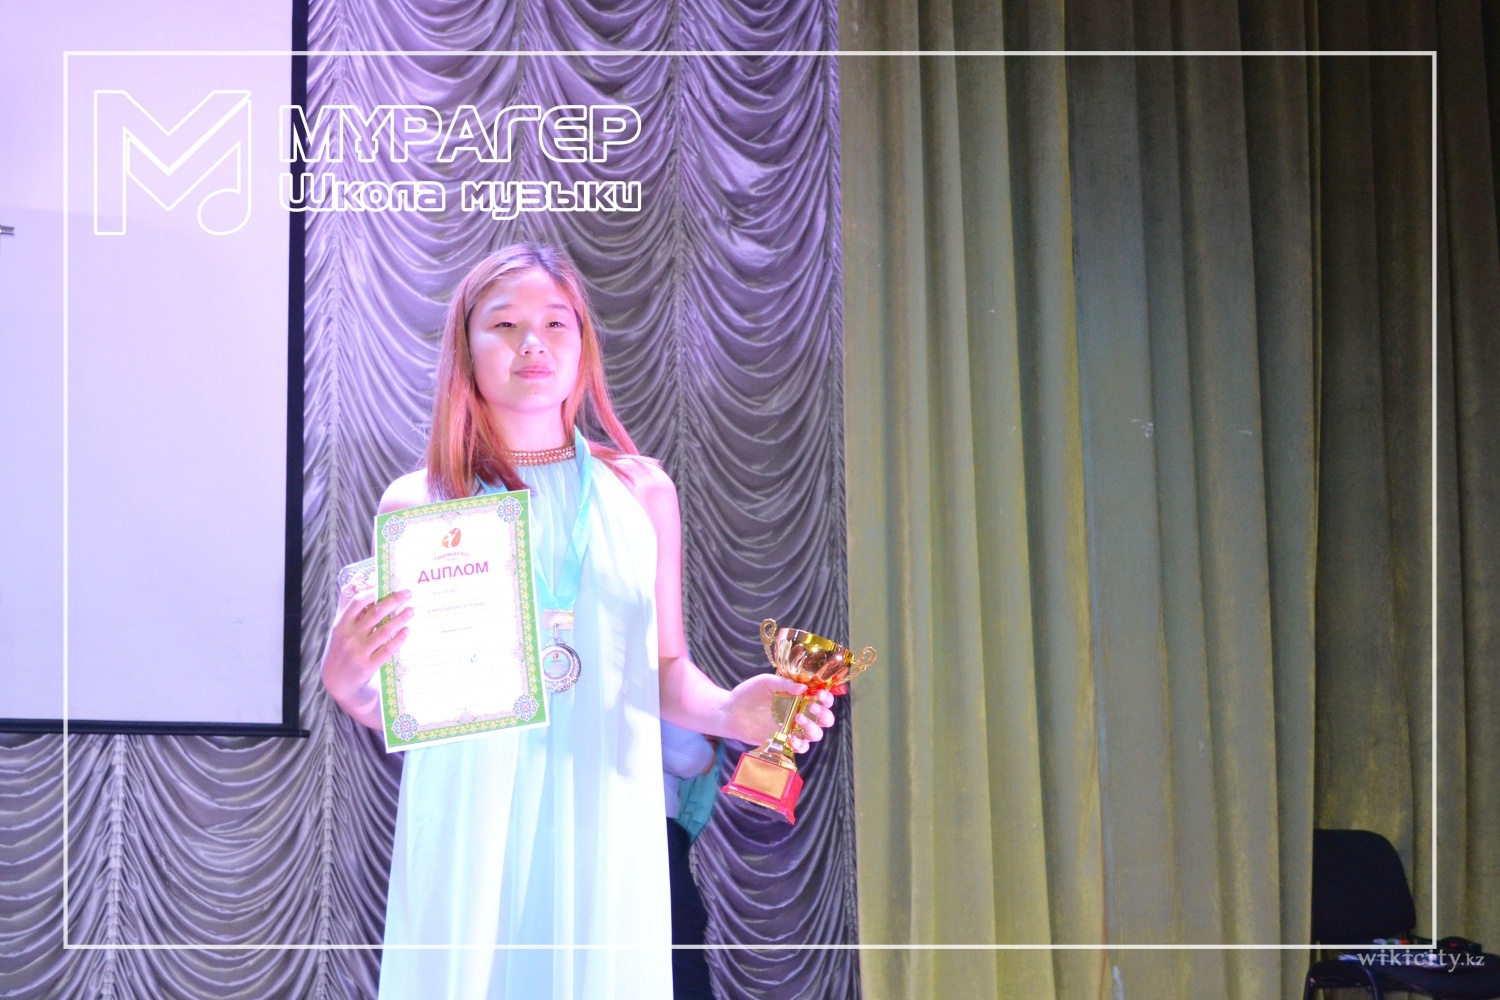 Фото Murager Music School - Almaty. Наши победители Гран-при в  международном конкурсе по вокалу